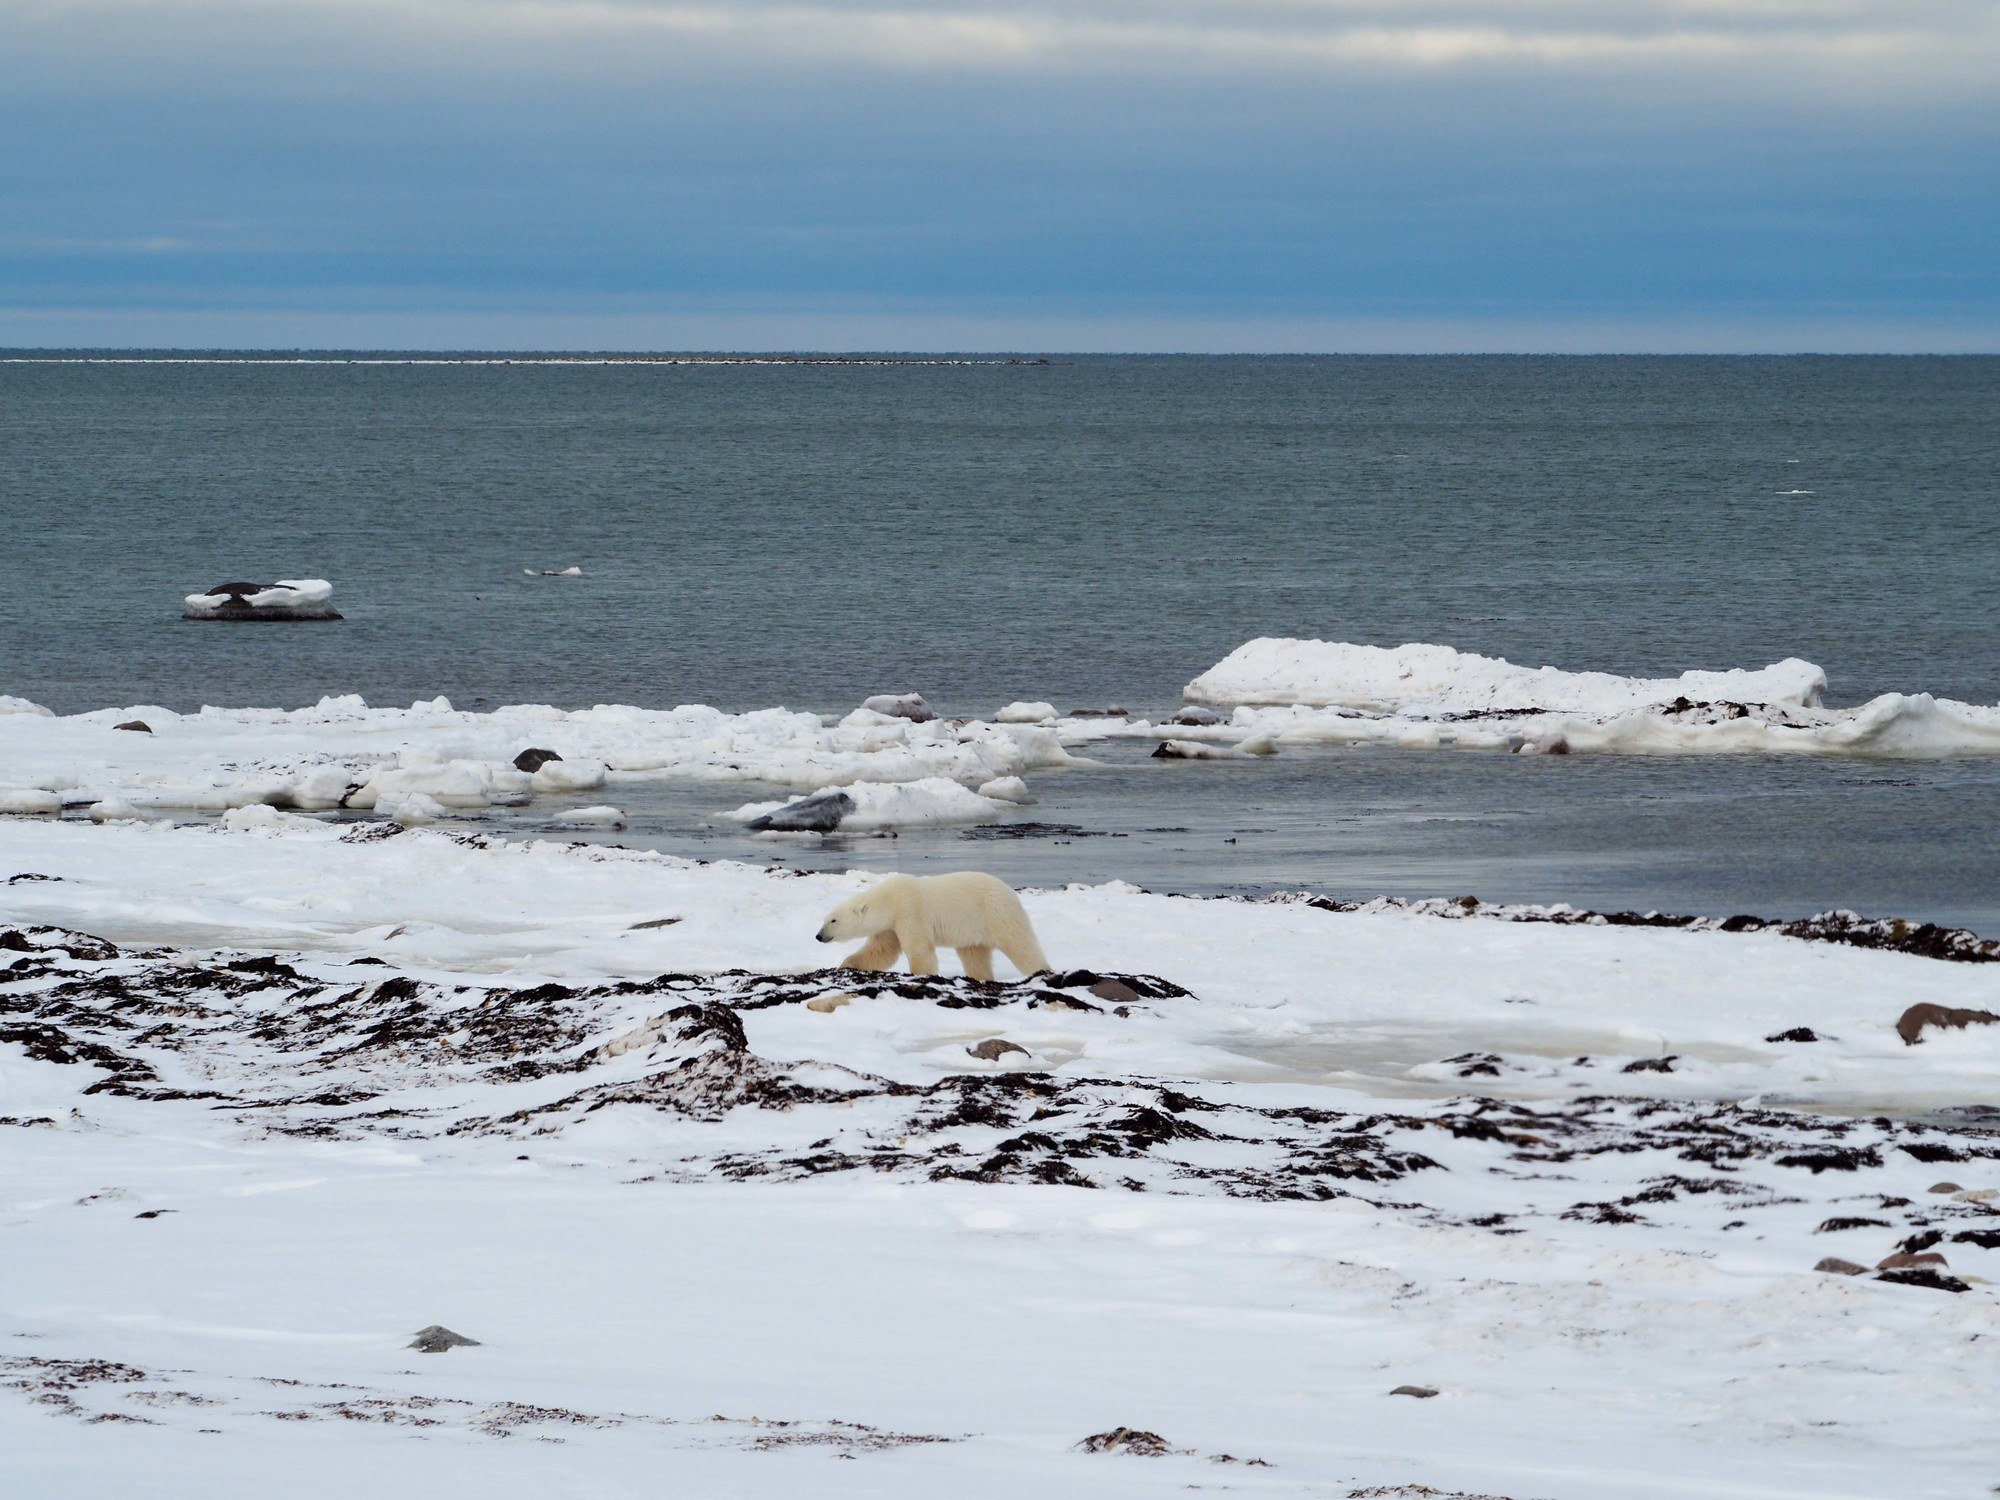 Polar bear in Manitoba